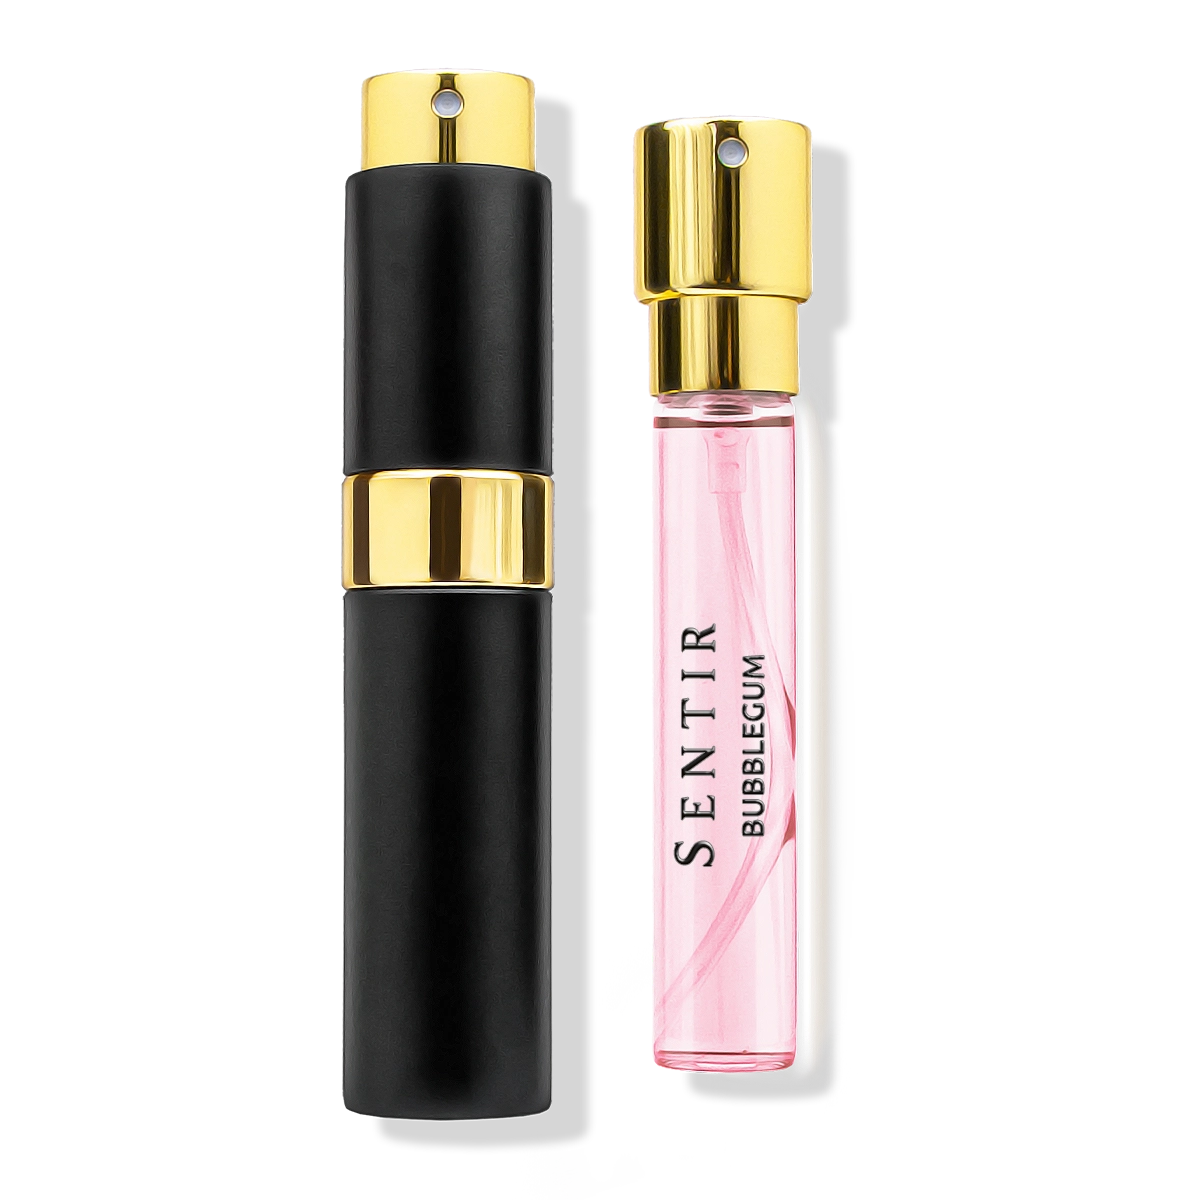 Kilian Love Don't Be Shy Perfume Dupe, Clone, replica, Similar to, vergelijkbaar, smell-a-like, smell like, perfume like, knock off, inspired, alternative, imitation, alternative, cheap, cheapest price, best price